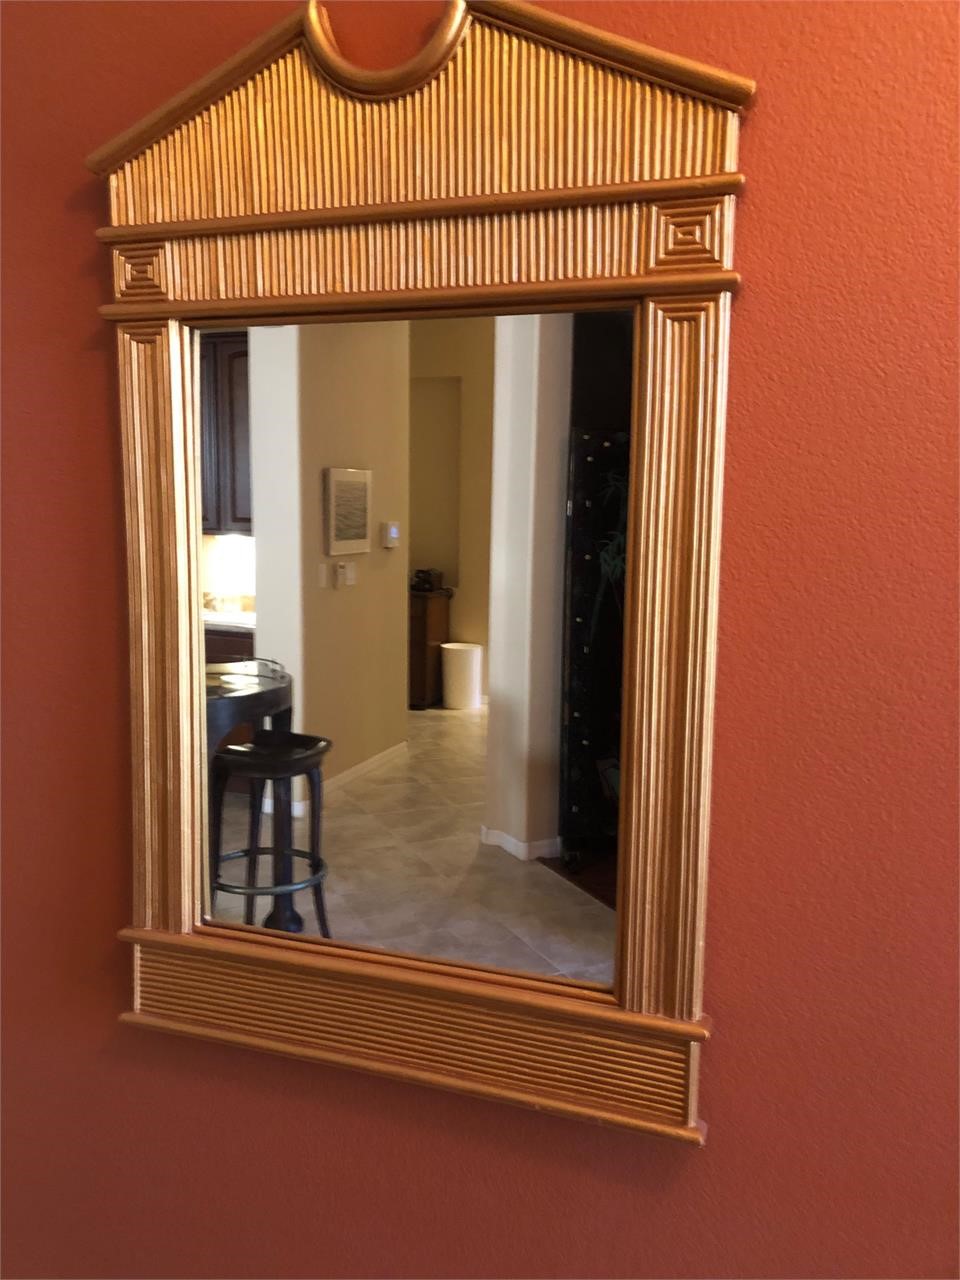 Wall mirror #29